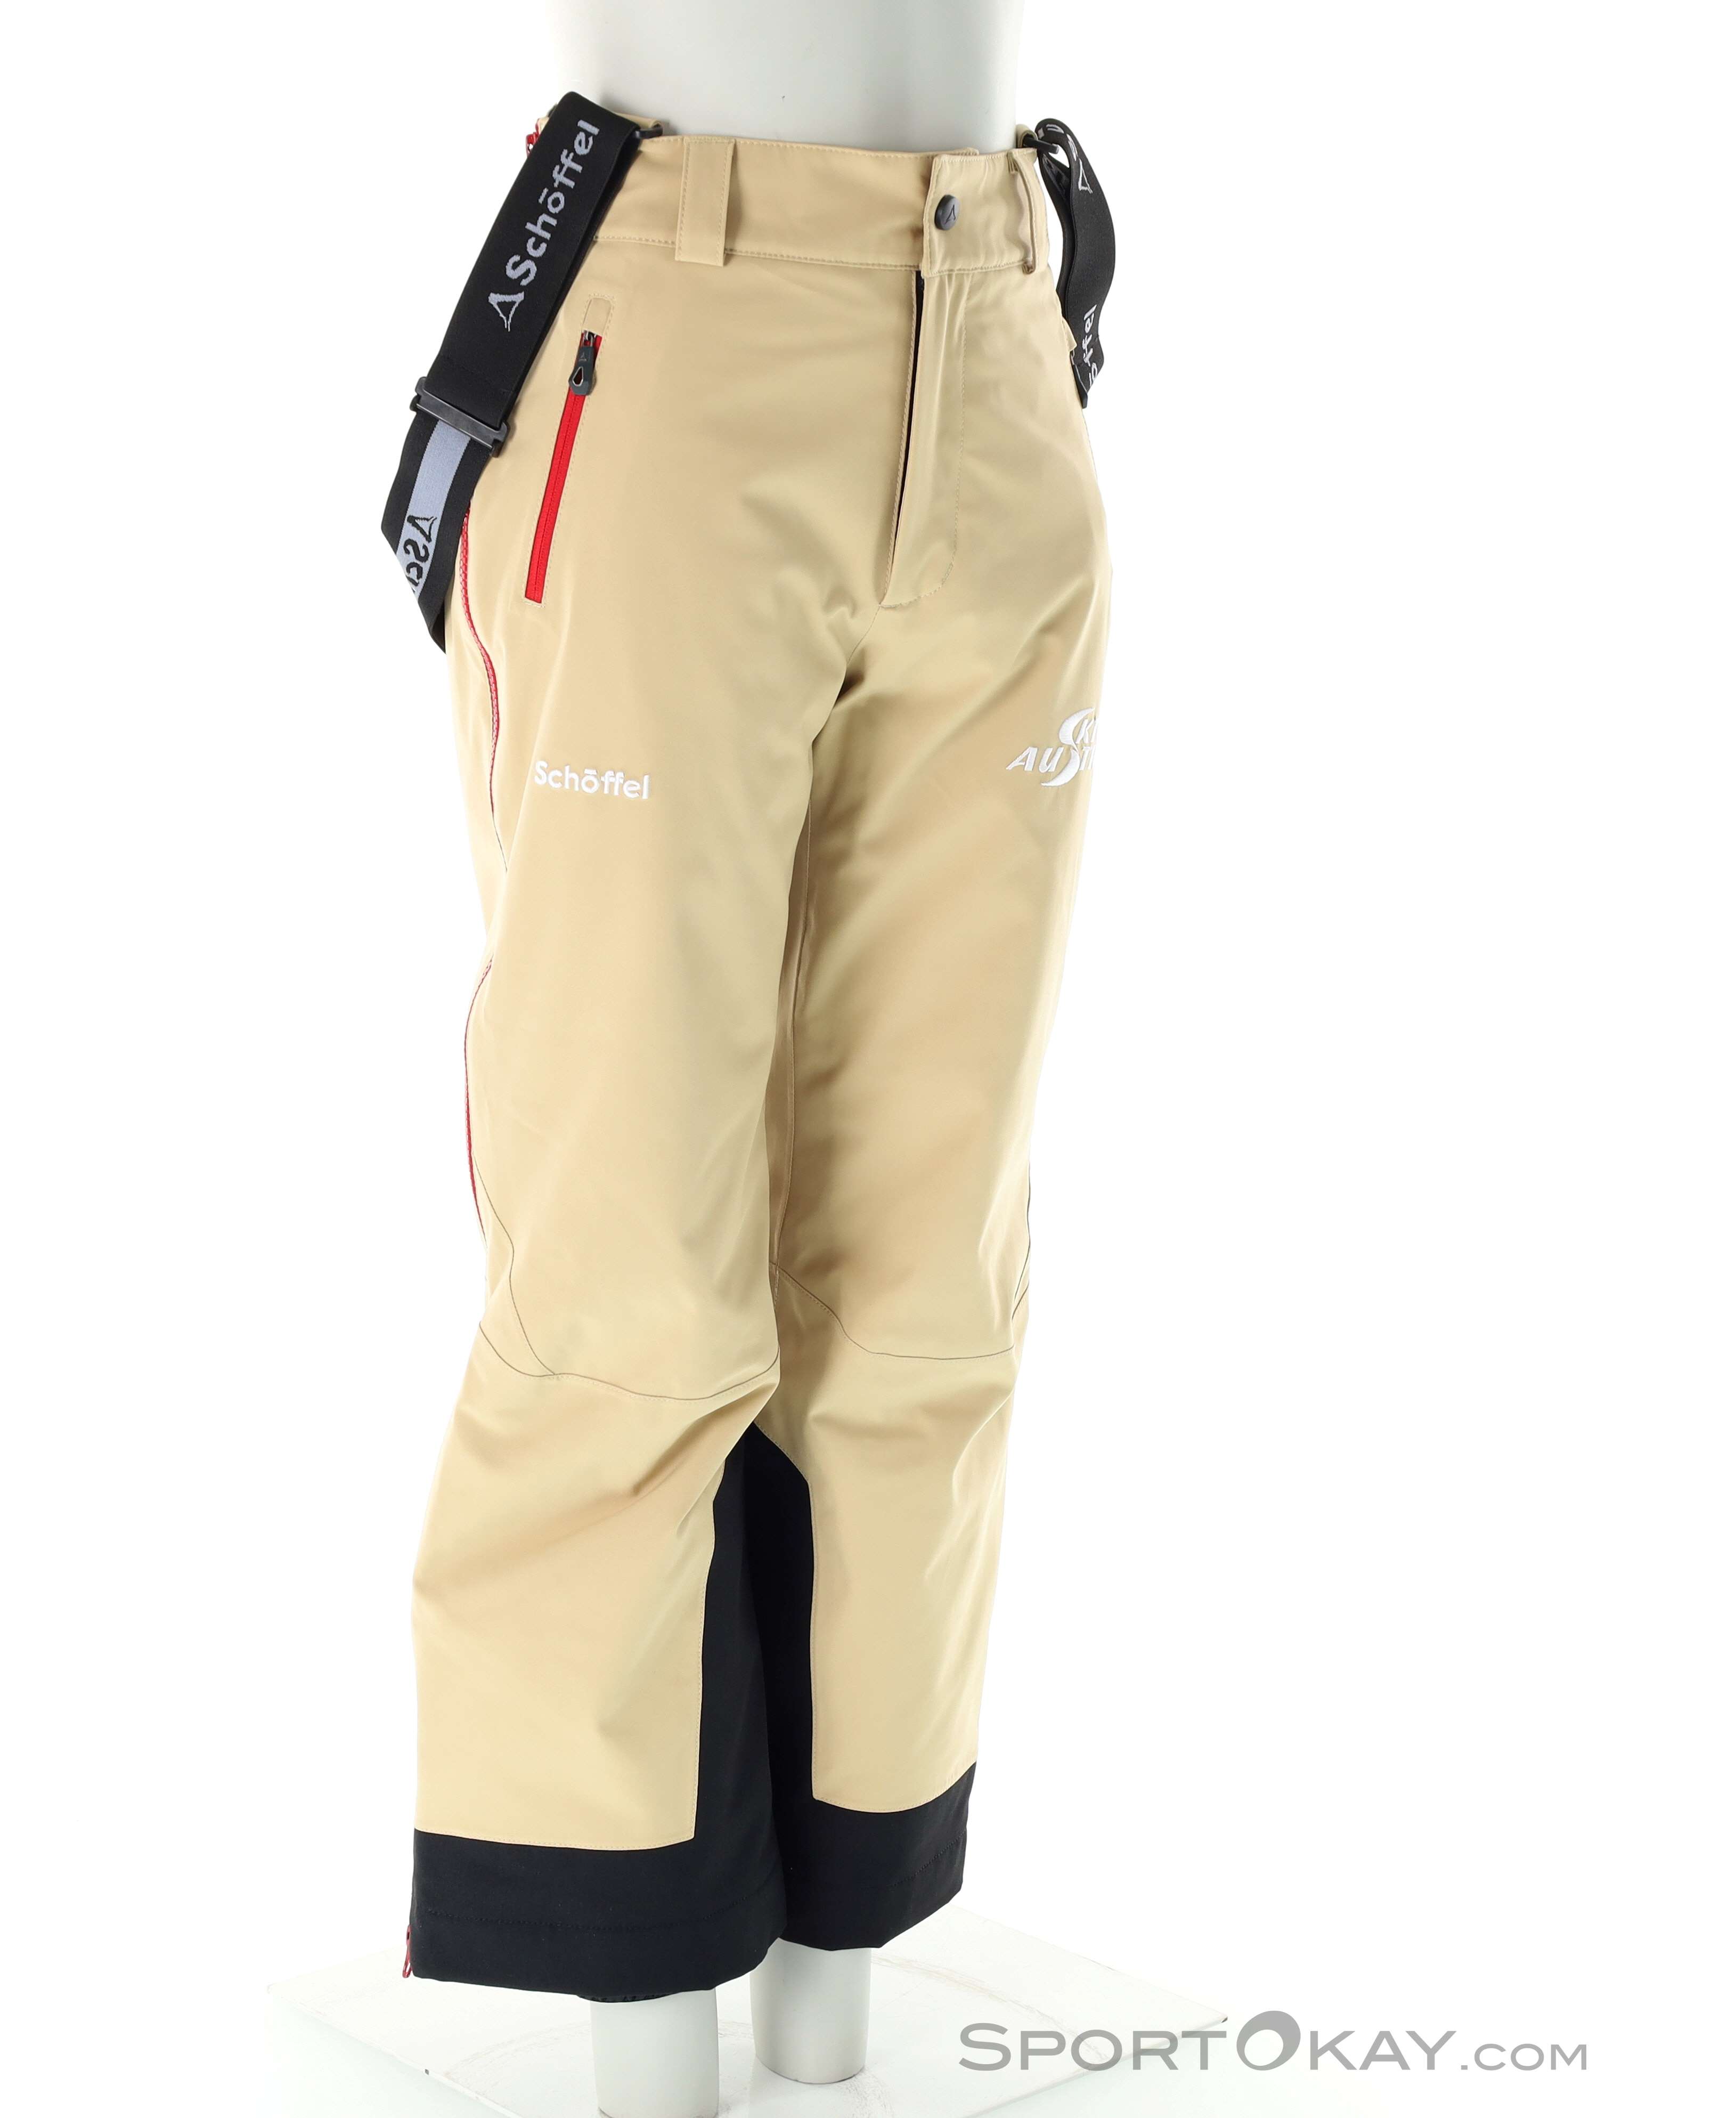 - & RT Ski - Ski Pants - All 1 Clothing Freeride - Ski Kids Ski Pants Stretchpants Zip Schöffel